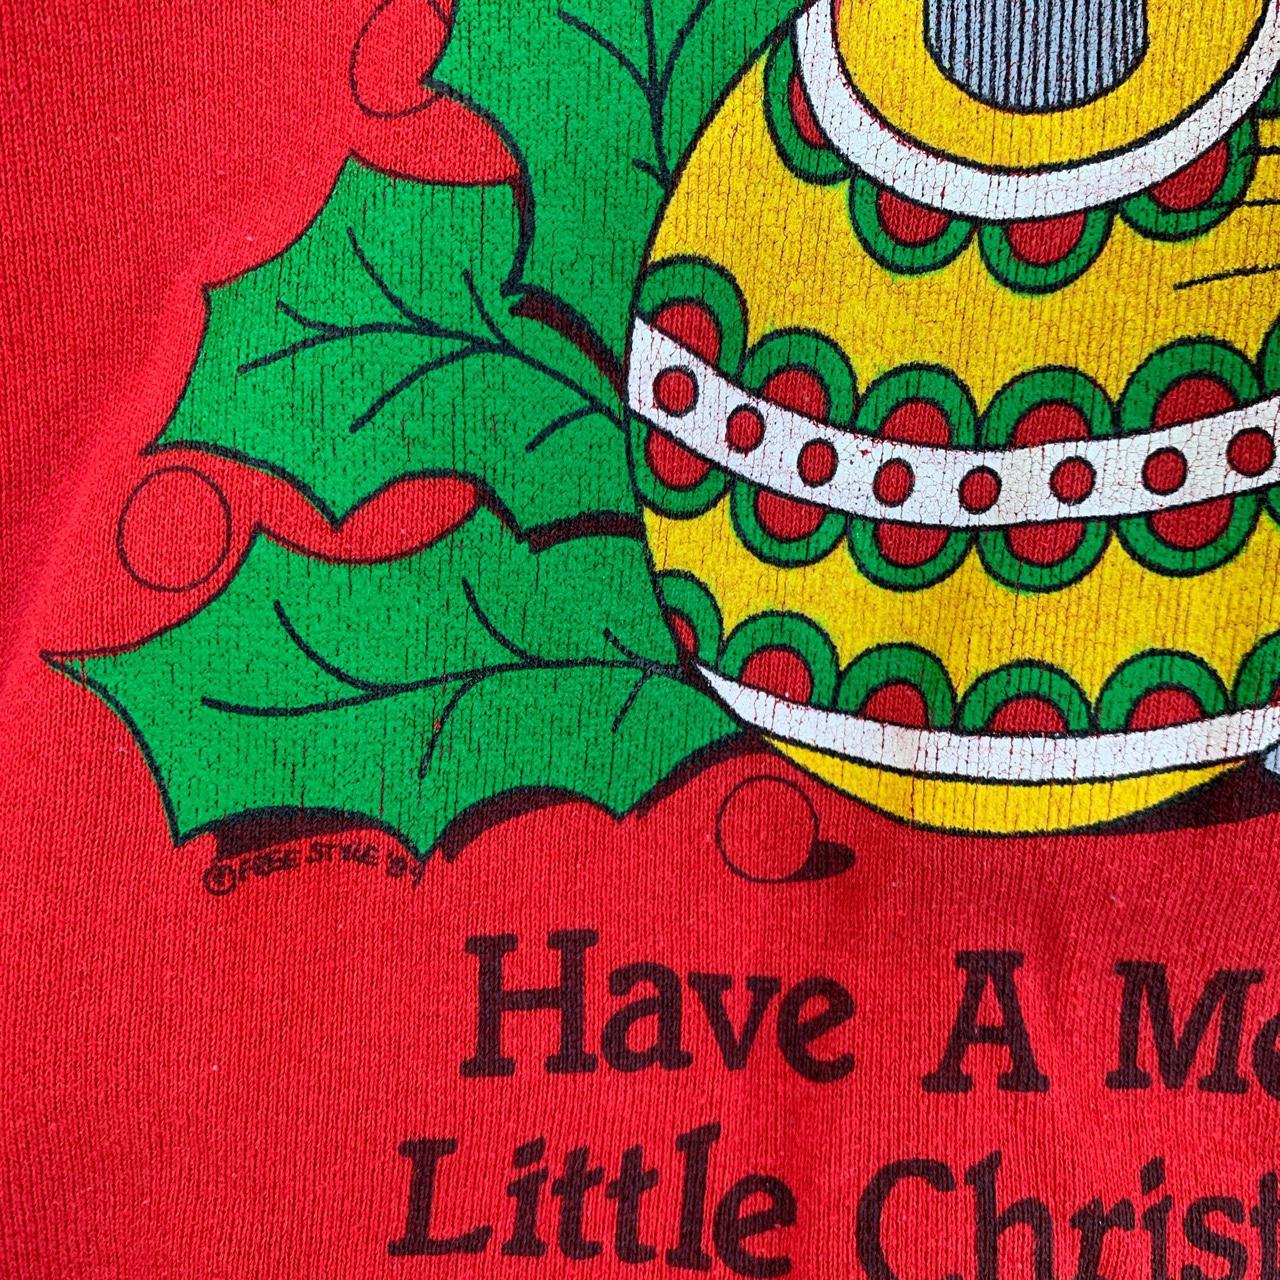 Product Image 4 - Vintage Christmas Sweatshirt

• great vintage